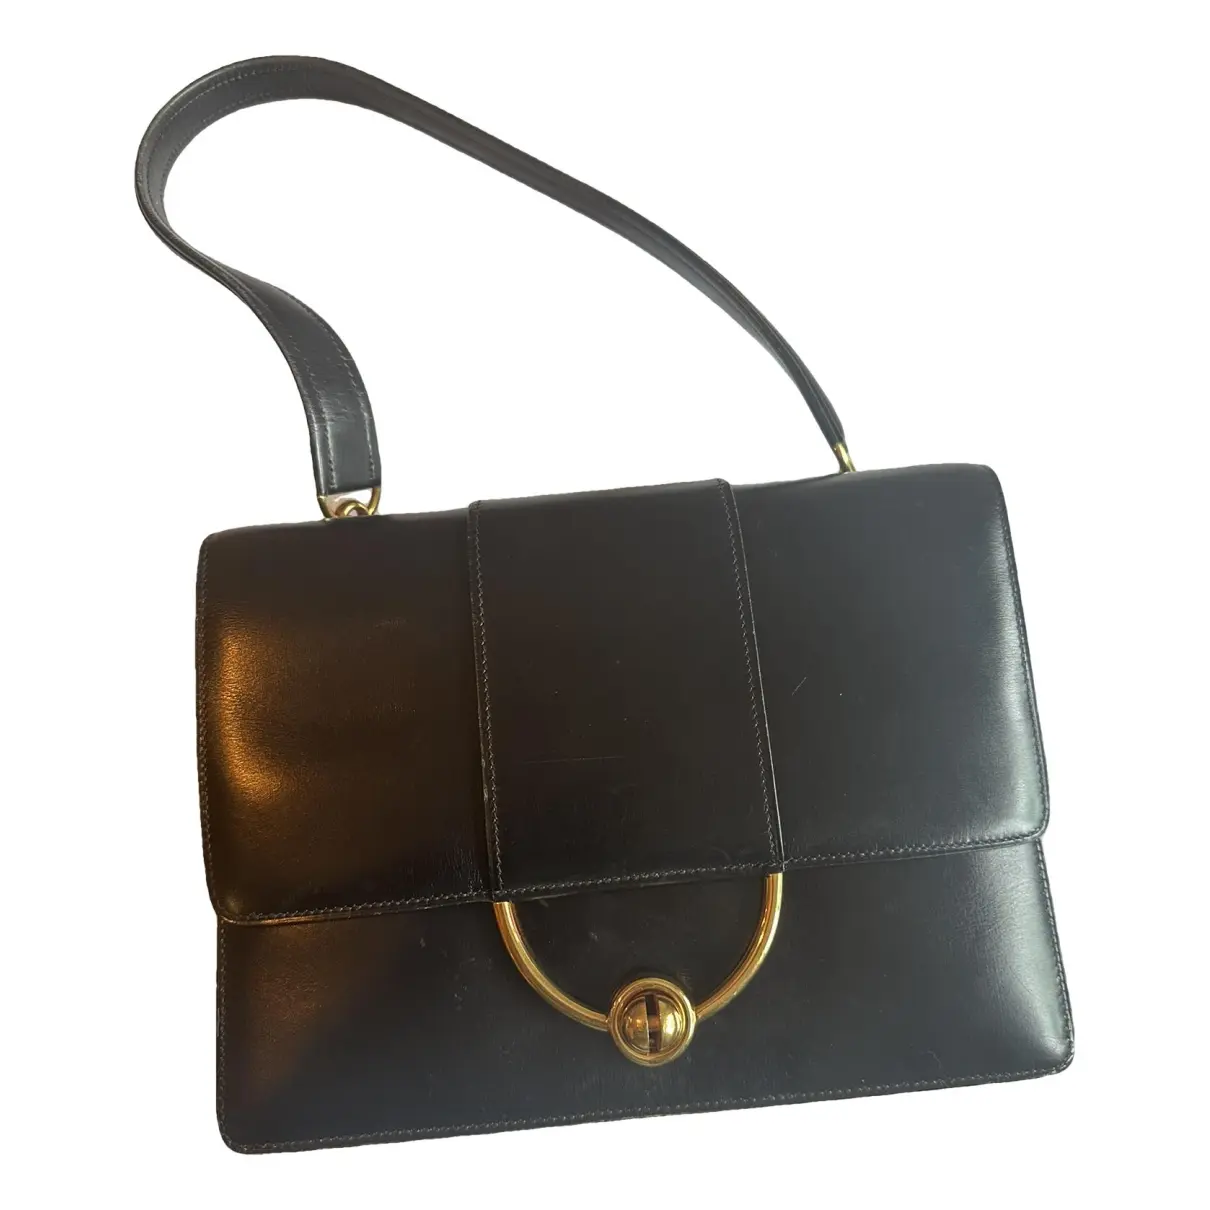 Ring leather handbag